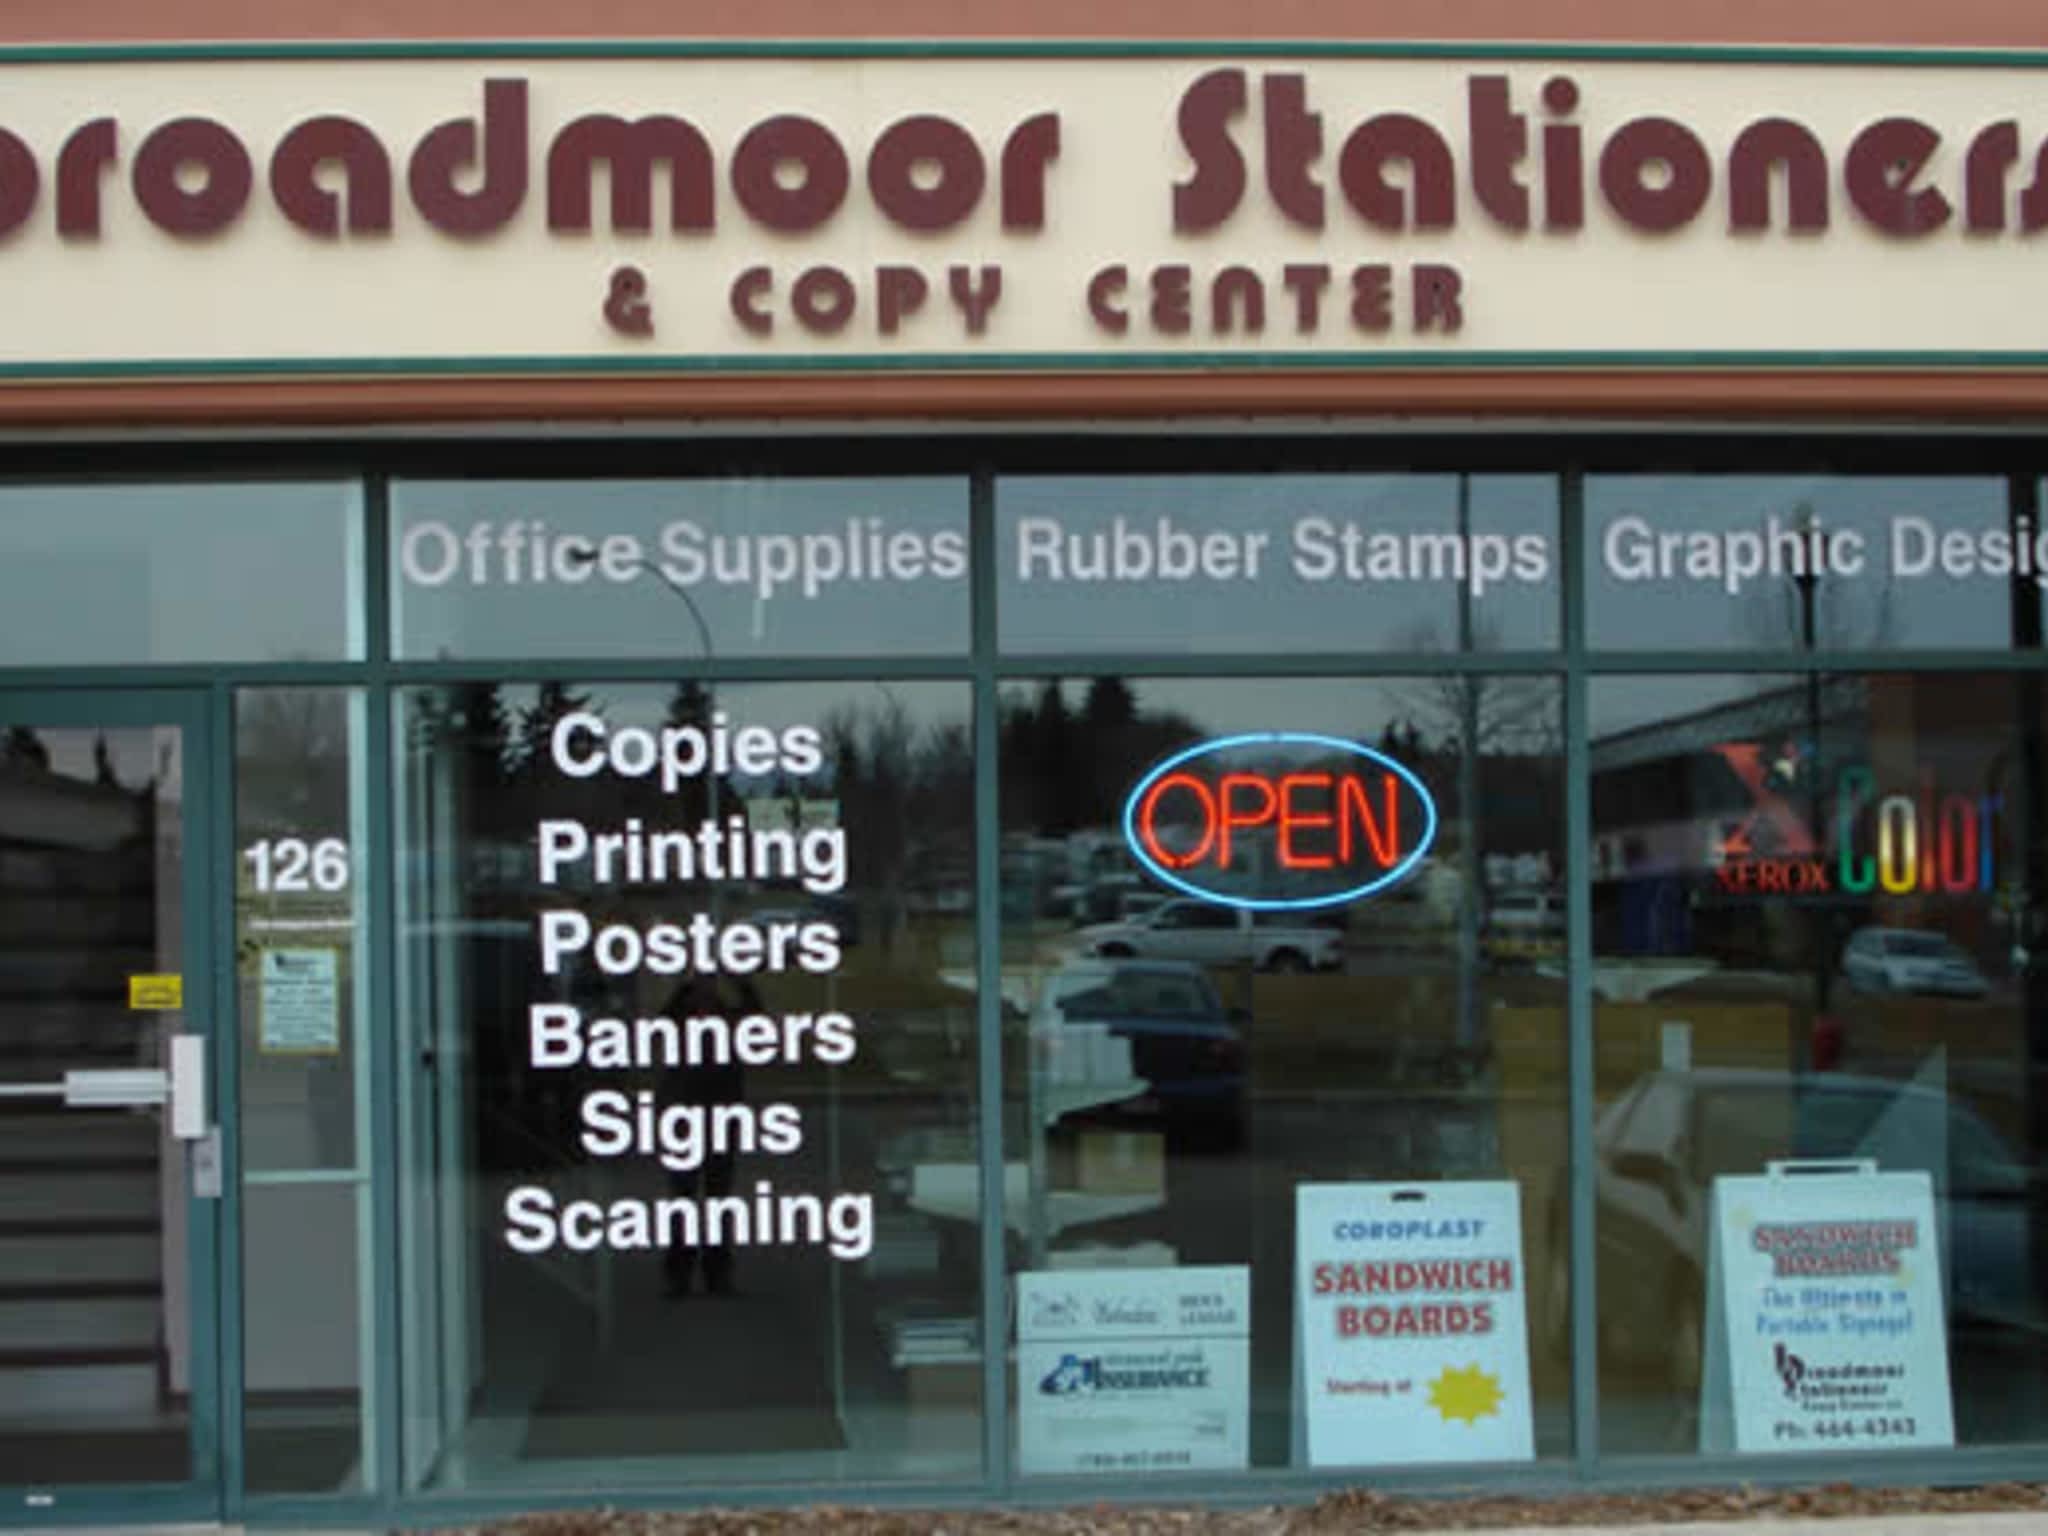 photo Broadmoor Stationers & Copy Center Ltd